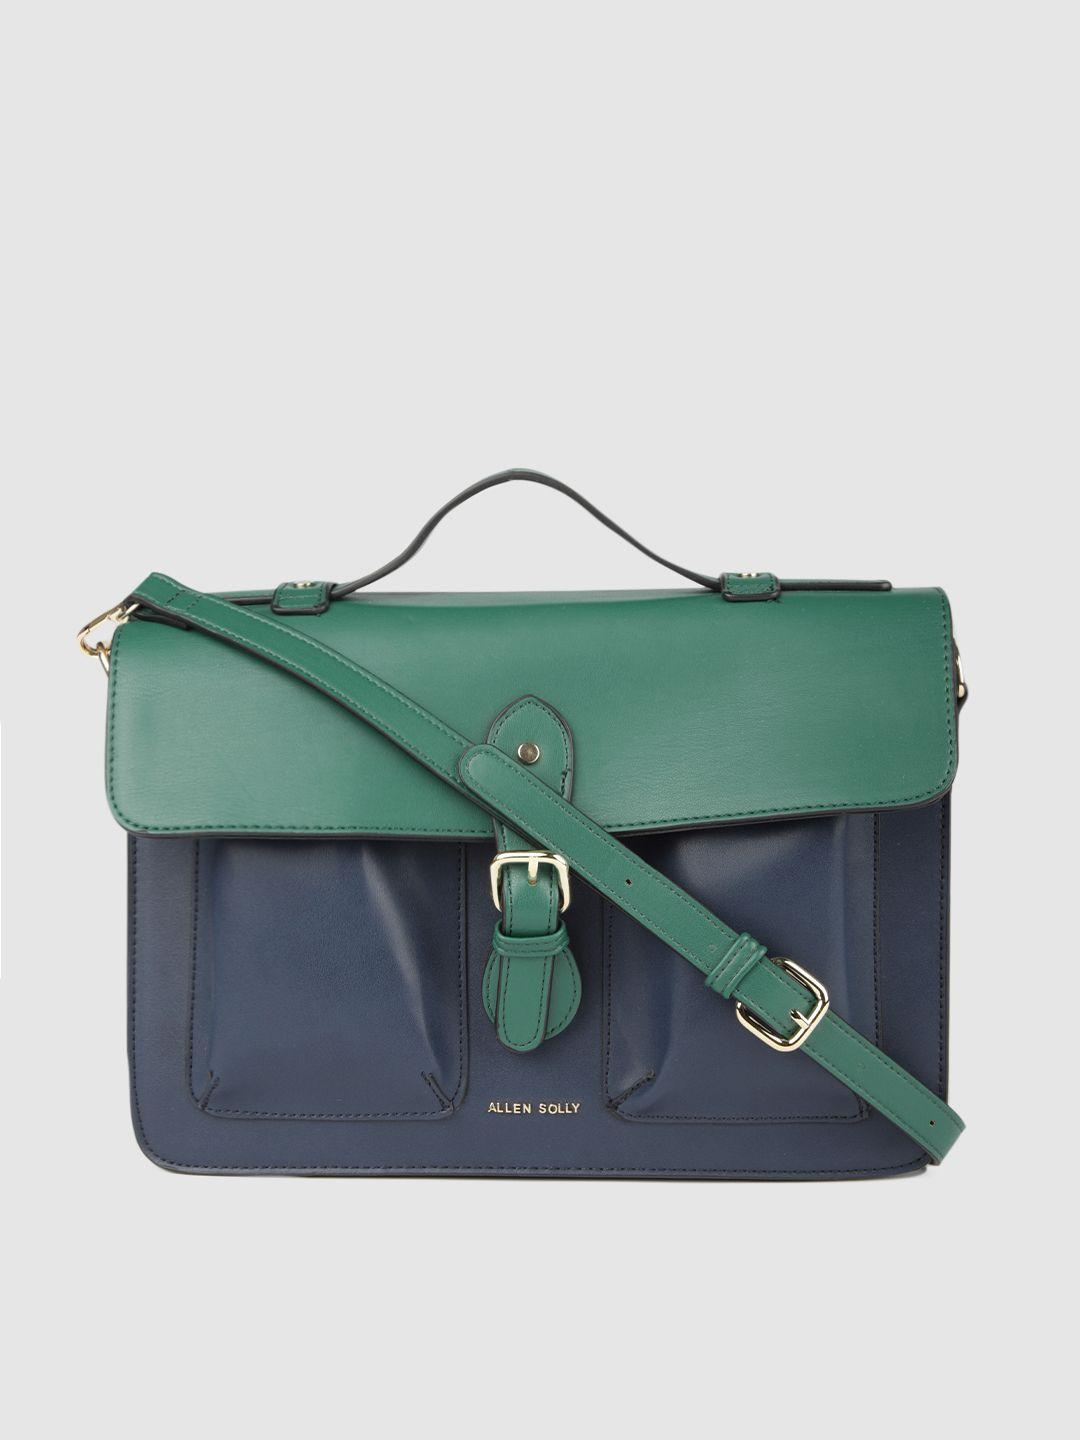 allen solly green & navy blue colourblocked satchel